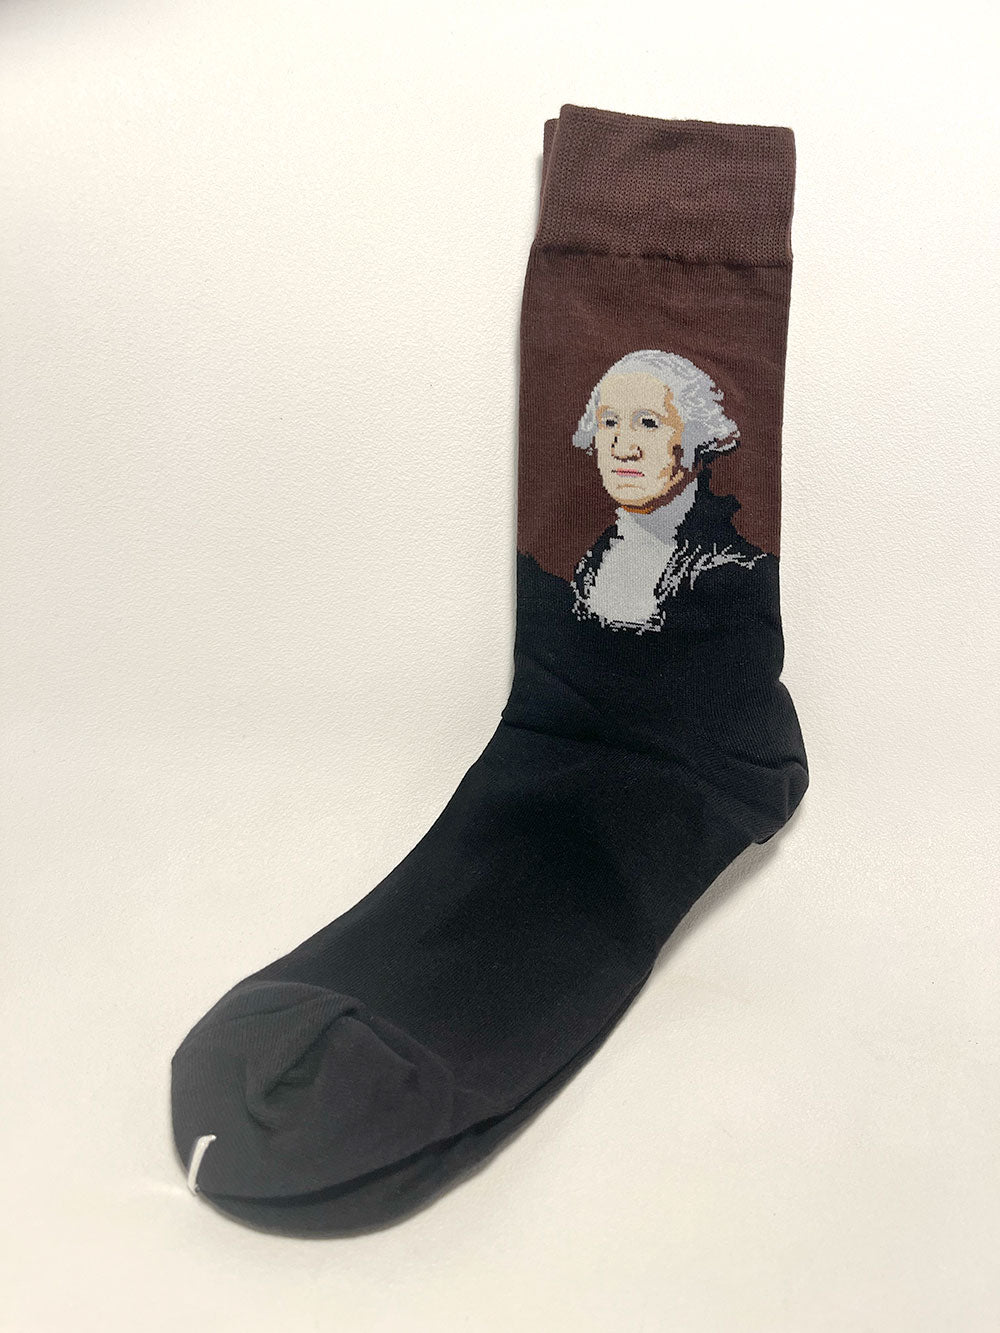 Rebel sock seven